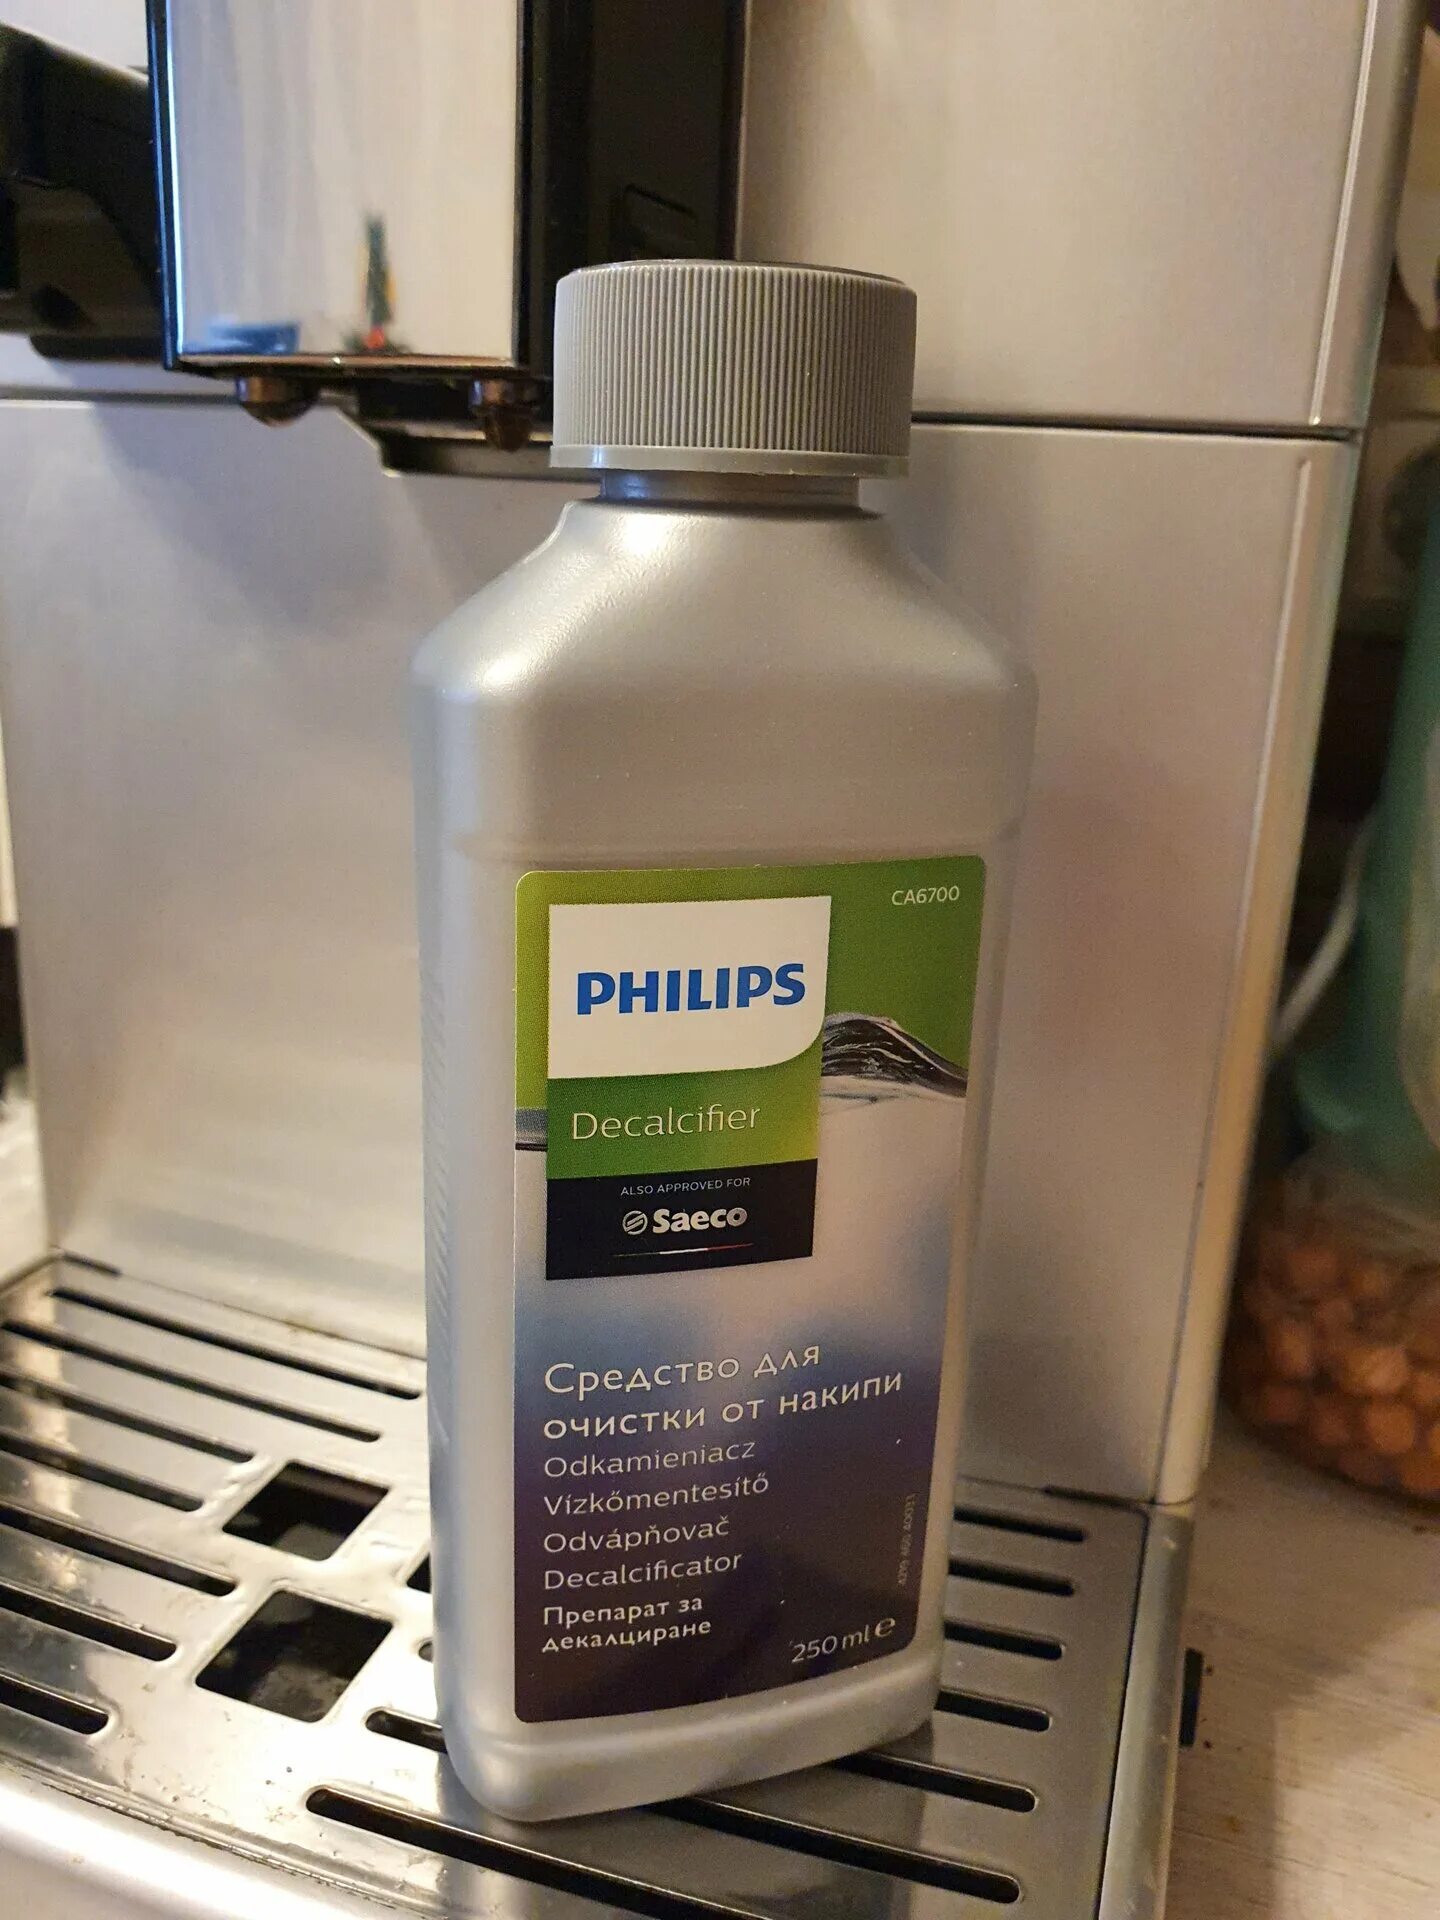 Philips средство для очистки. Кофемашина Филипс ca6700. Средство Philips ca6700/10, 250 мл. Ca6700/10 Philips кофемашина. Средство для чистки кофемашин Филипс.